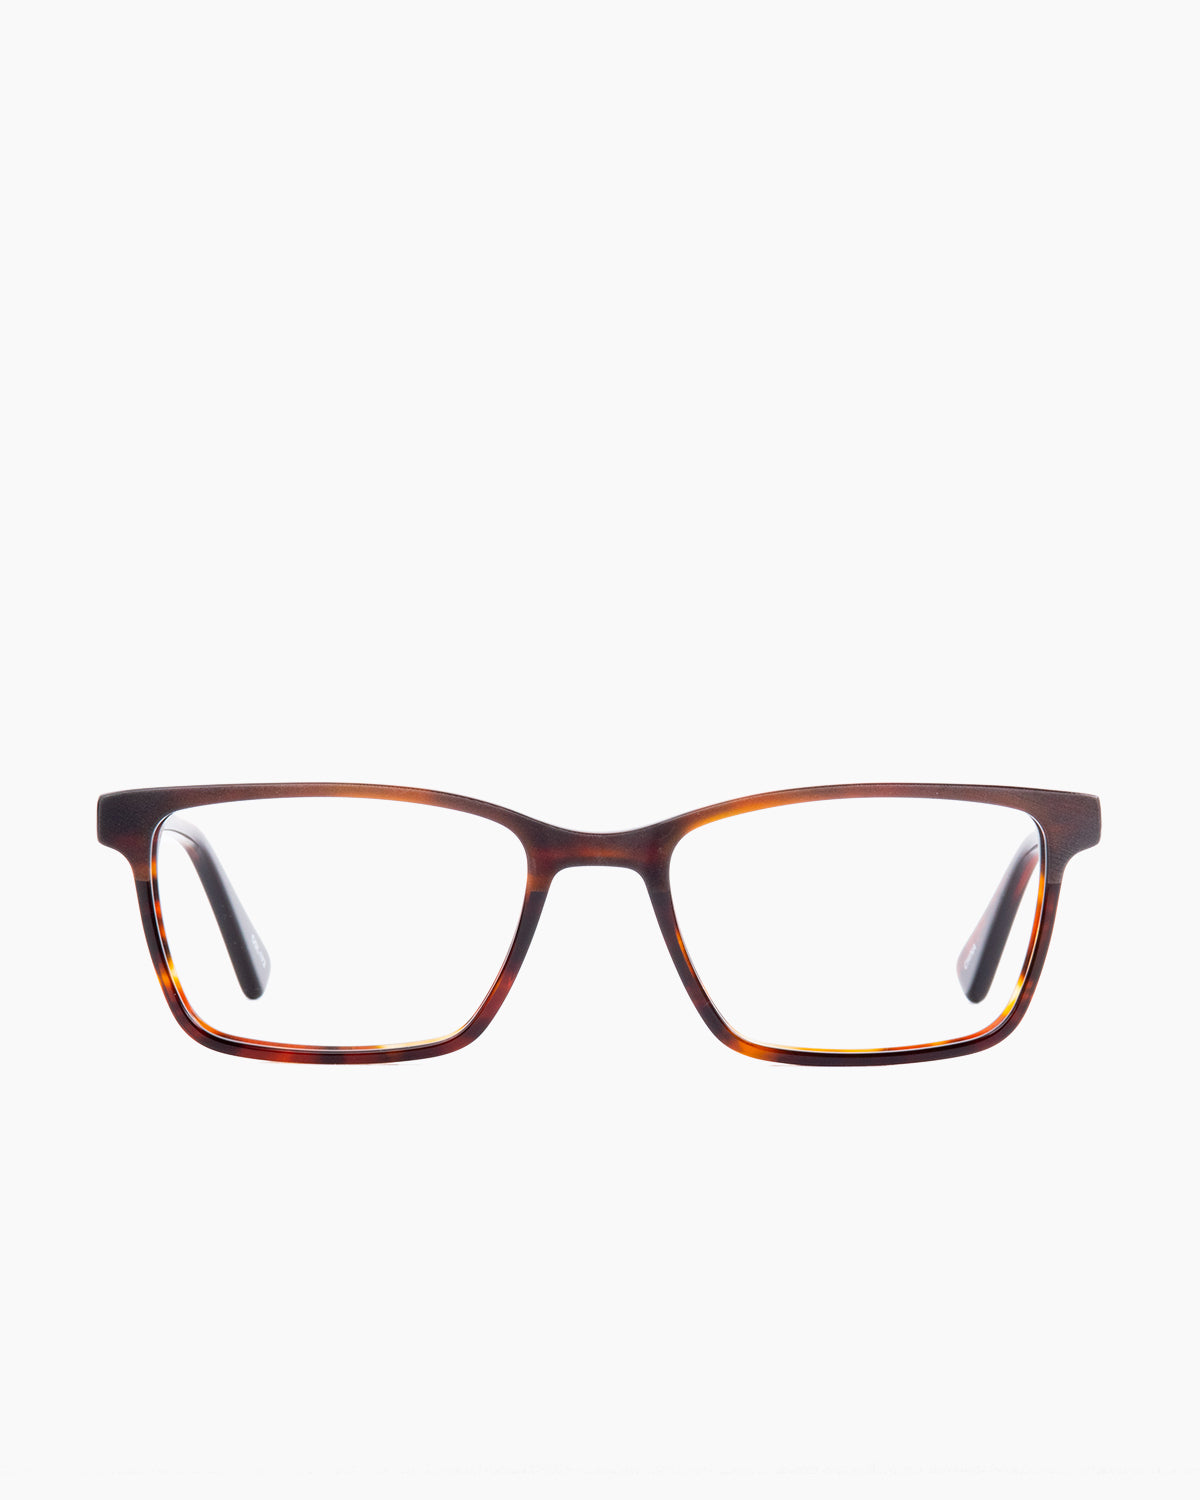 Evolve - Garfield - 172 | glasses bar:  Marie-Sophie Dion